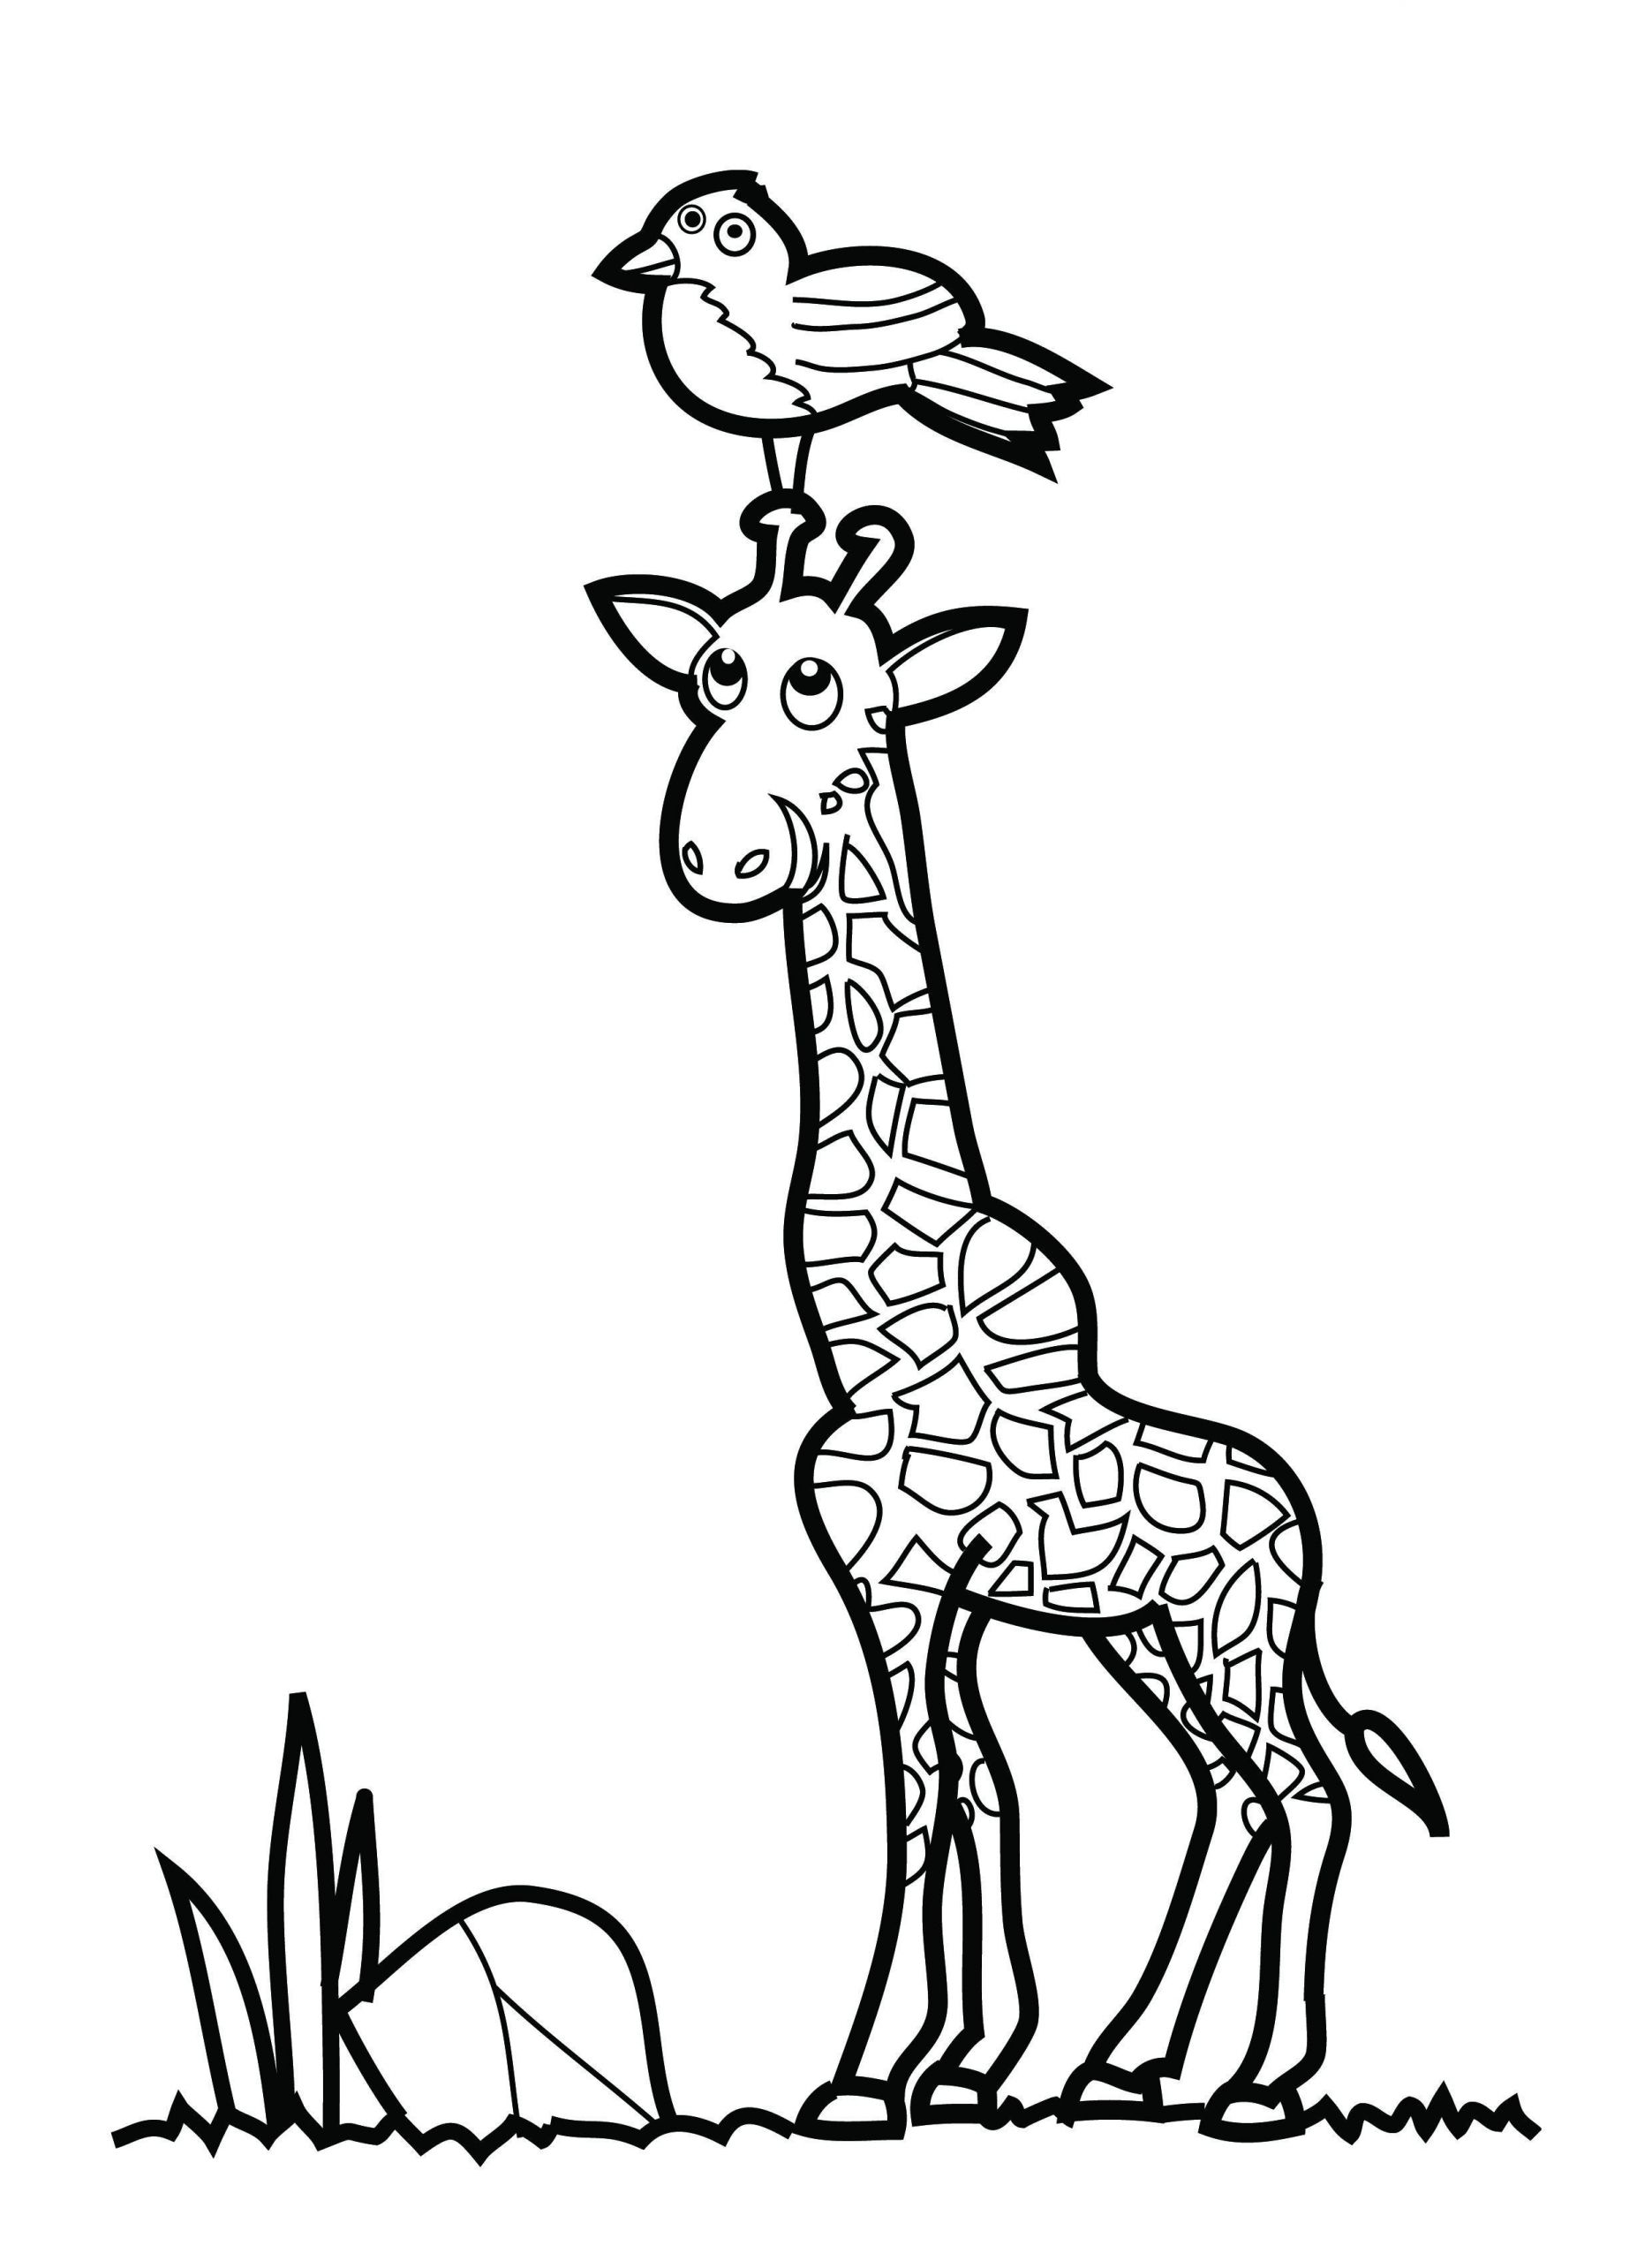 Coloring Pages For Kids For Free
 Malvorlagen fur kinder Ausmalbilder Giraffe kostenlos